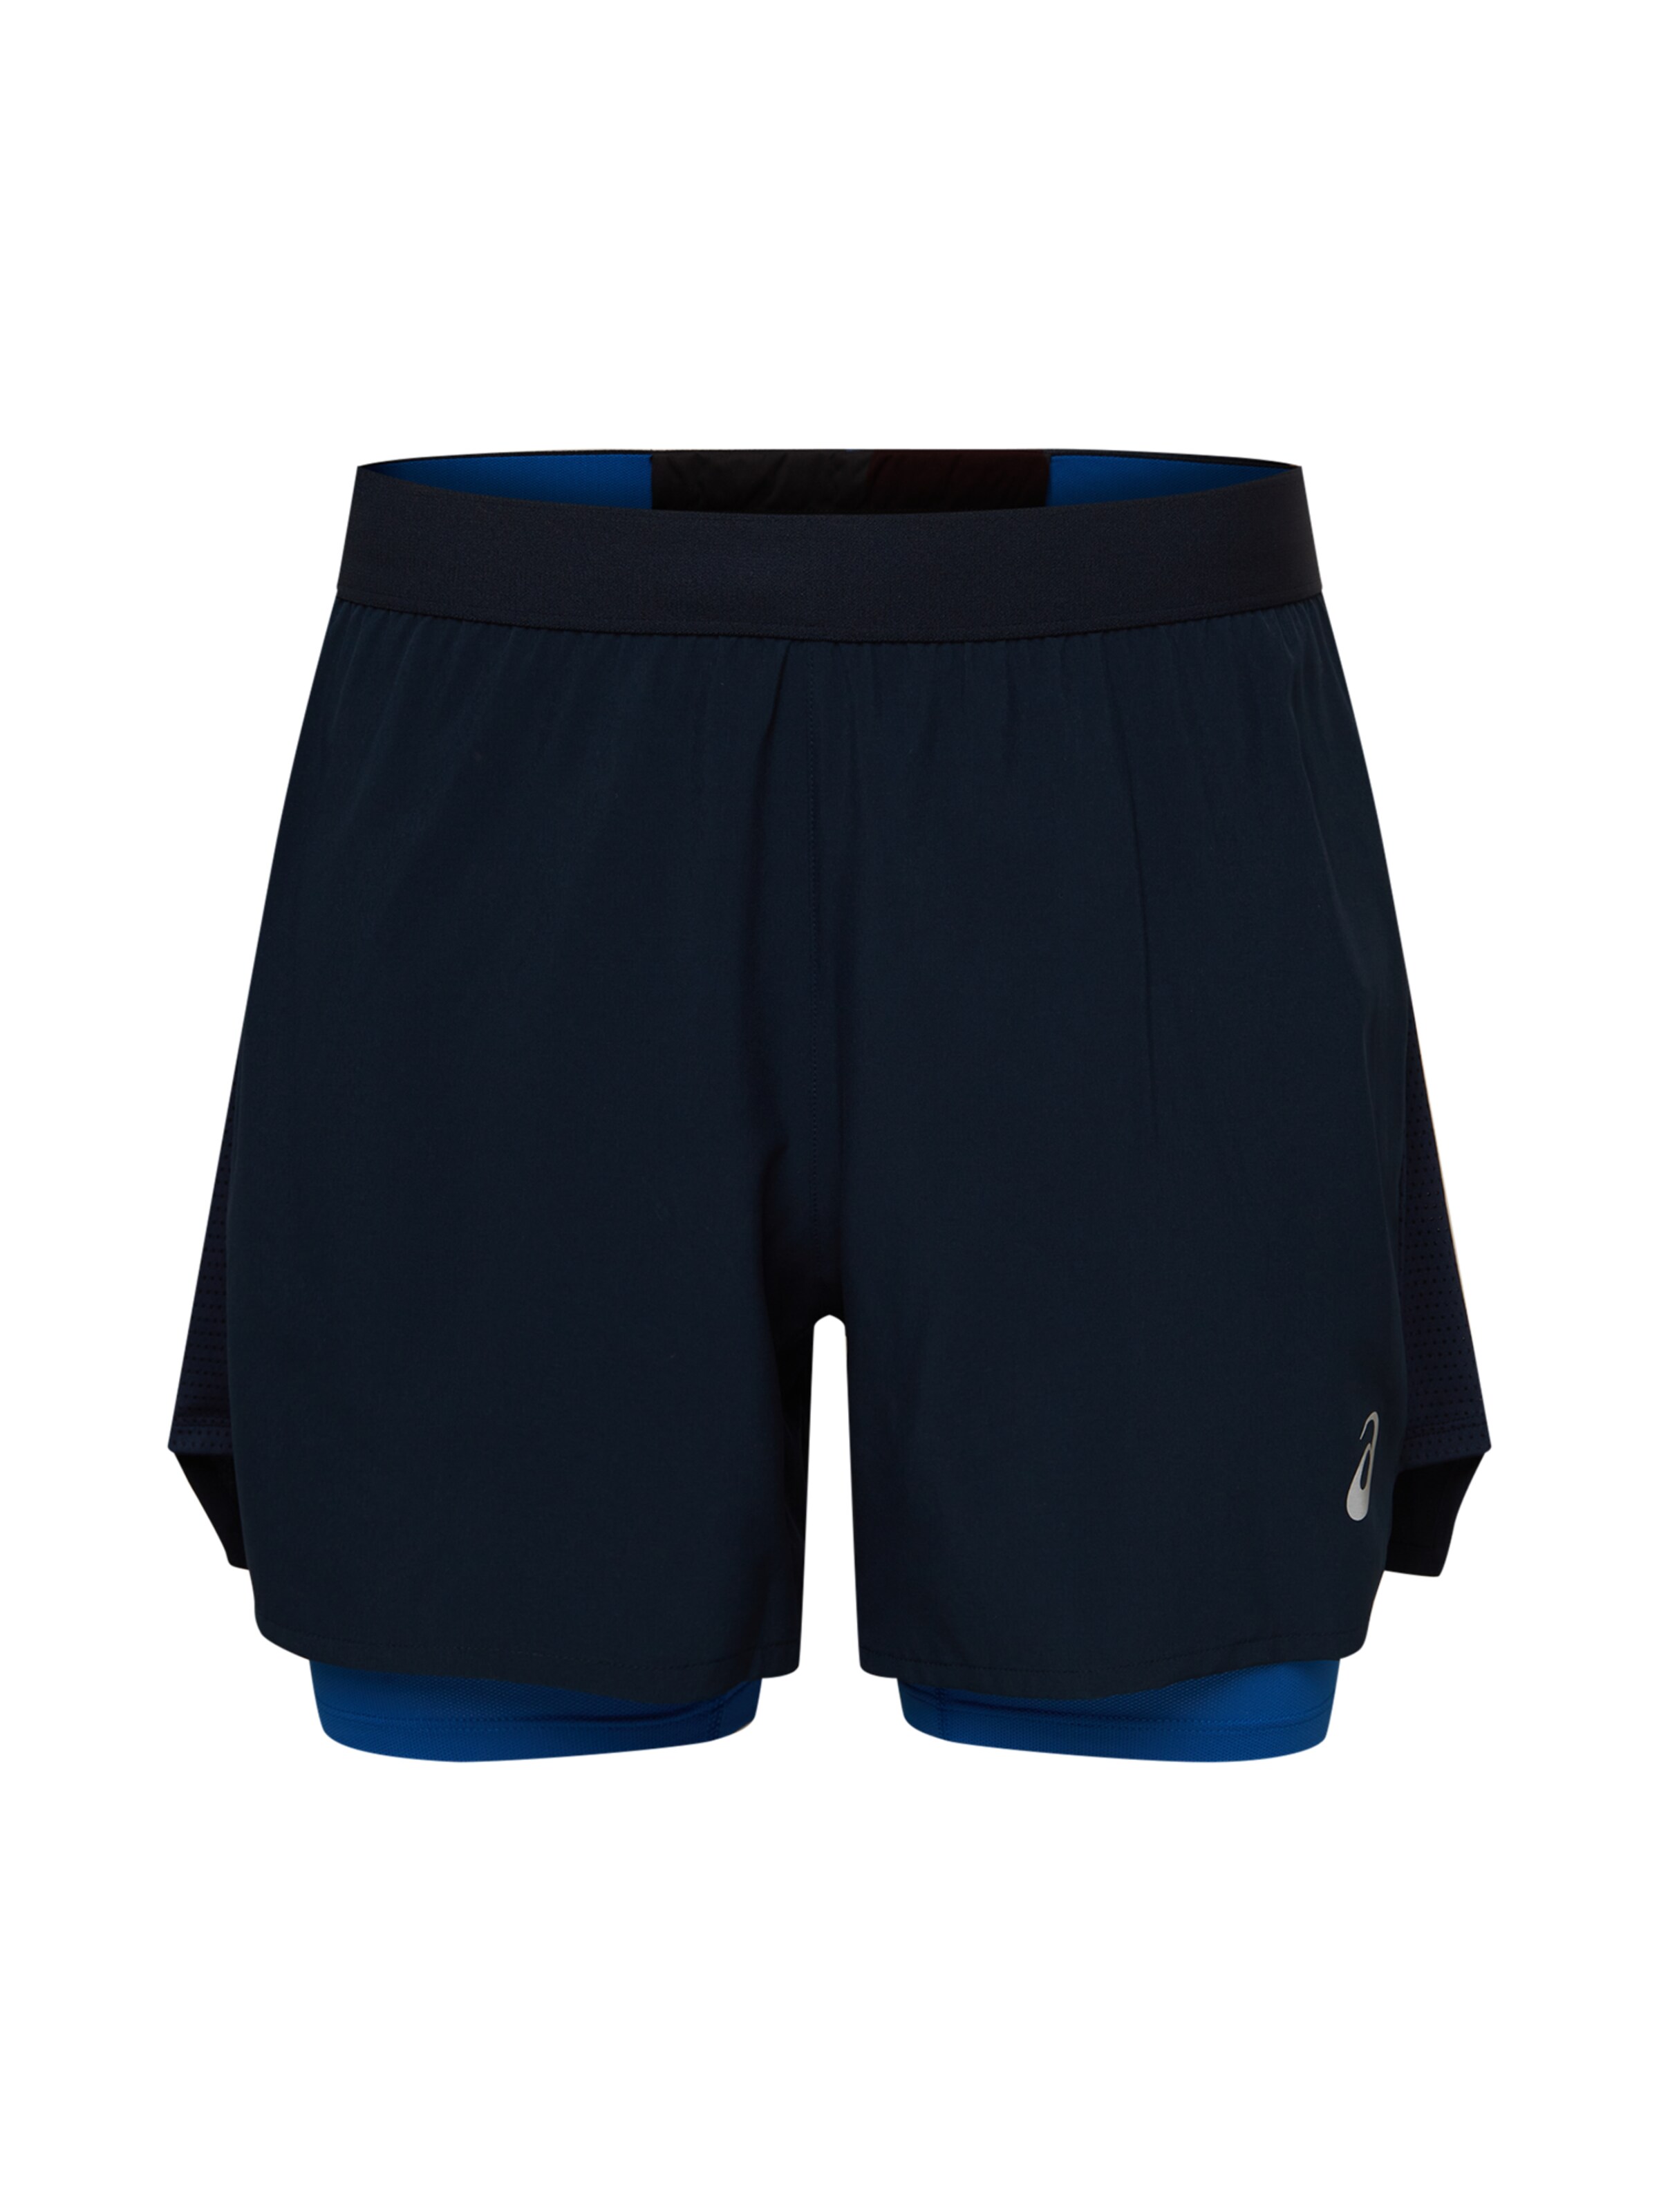 poyzr Uomo ASICS Pantaloni sportivi ROAD 2-N-1 in Blu, Blu Cobalto 